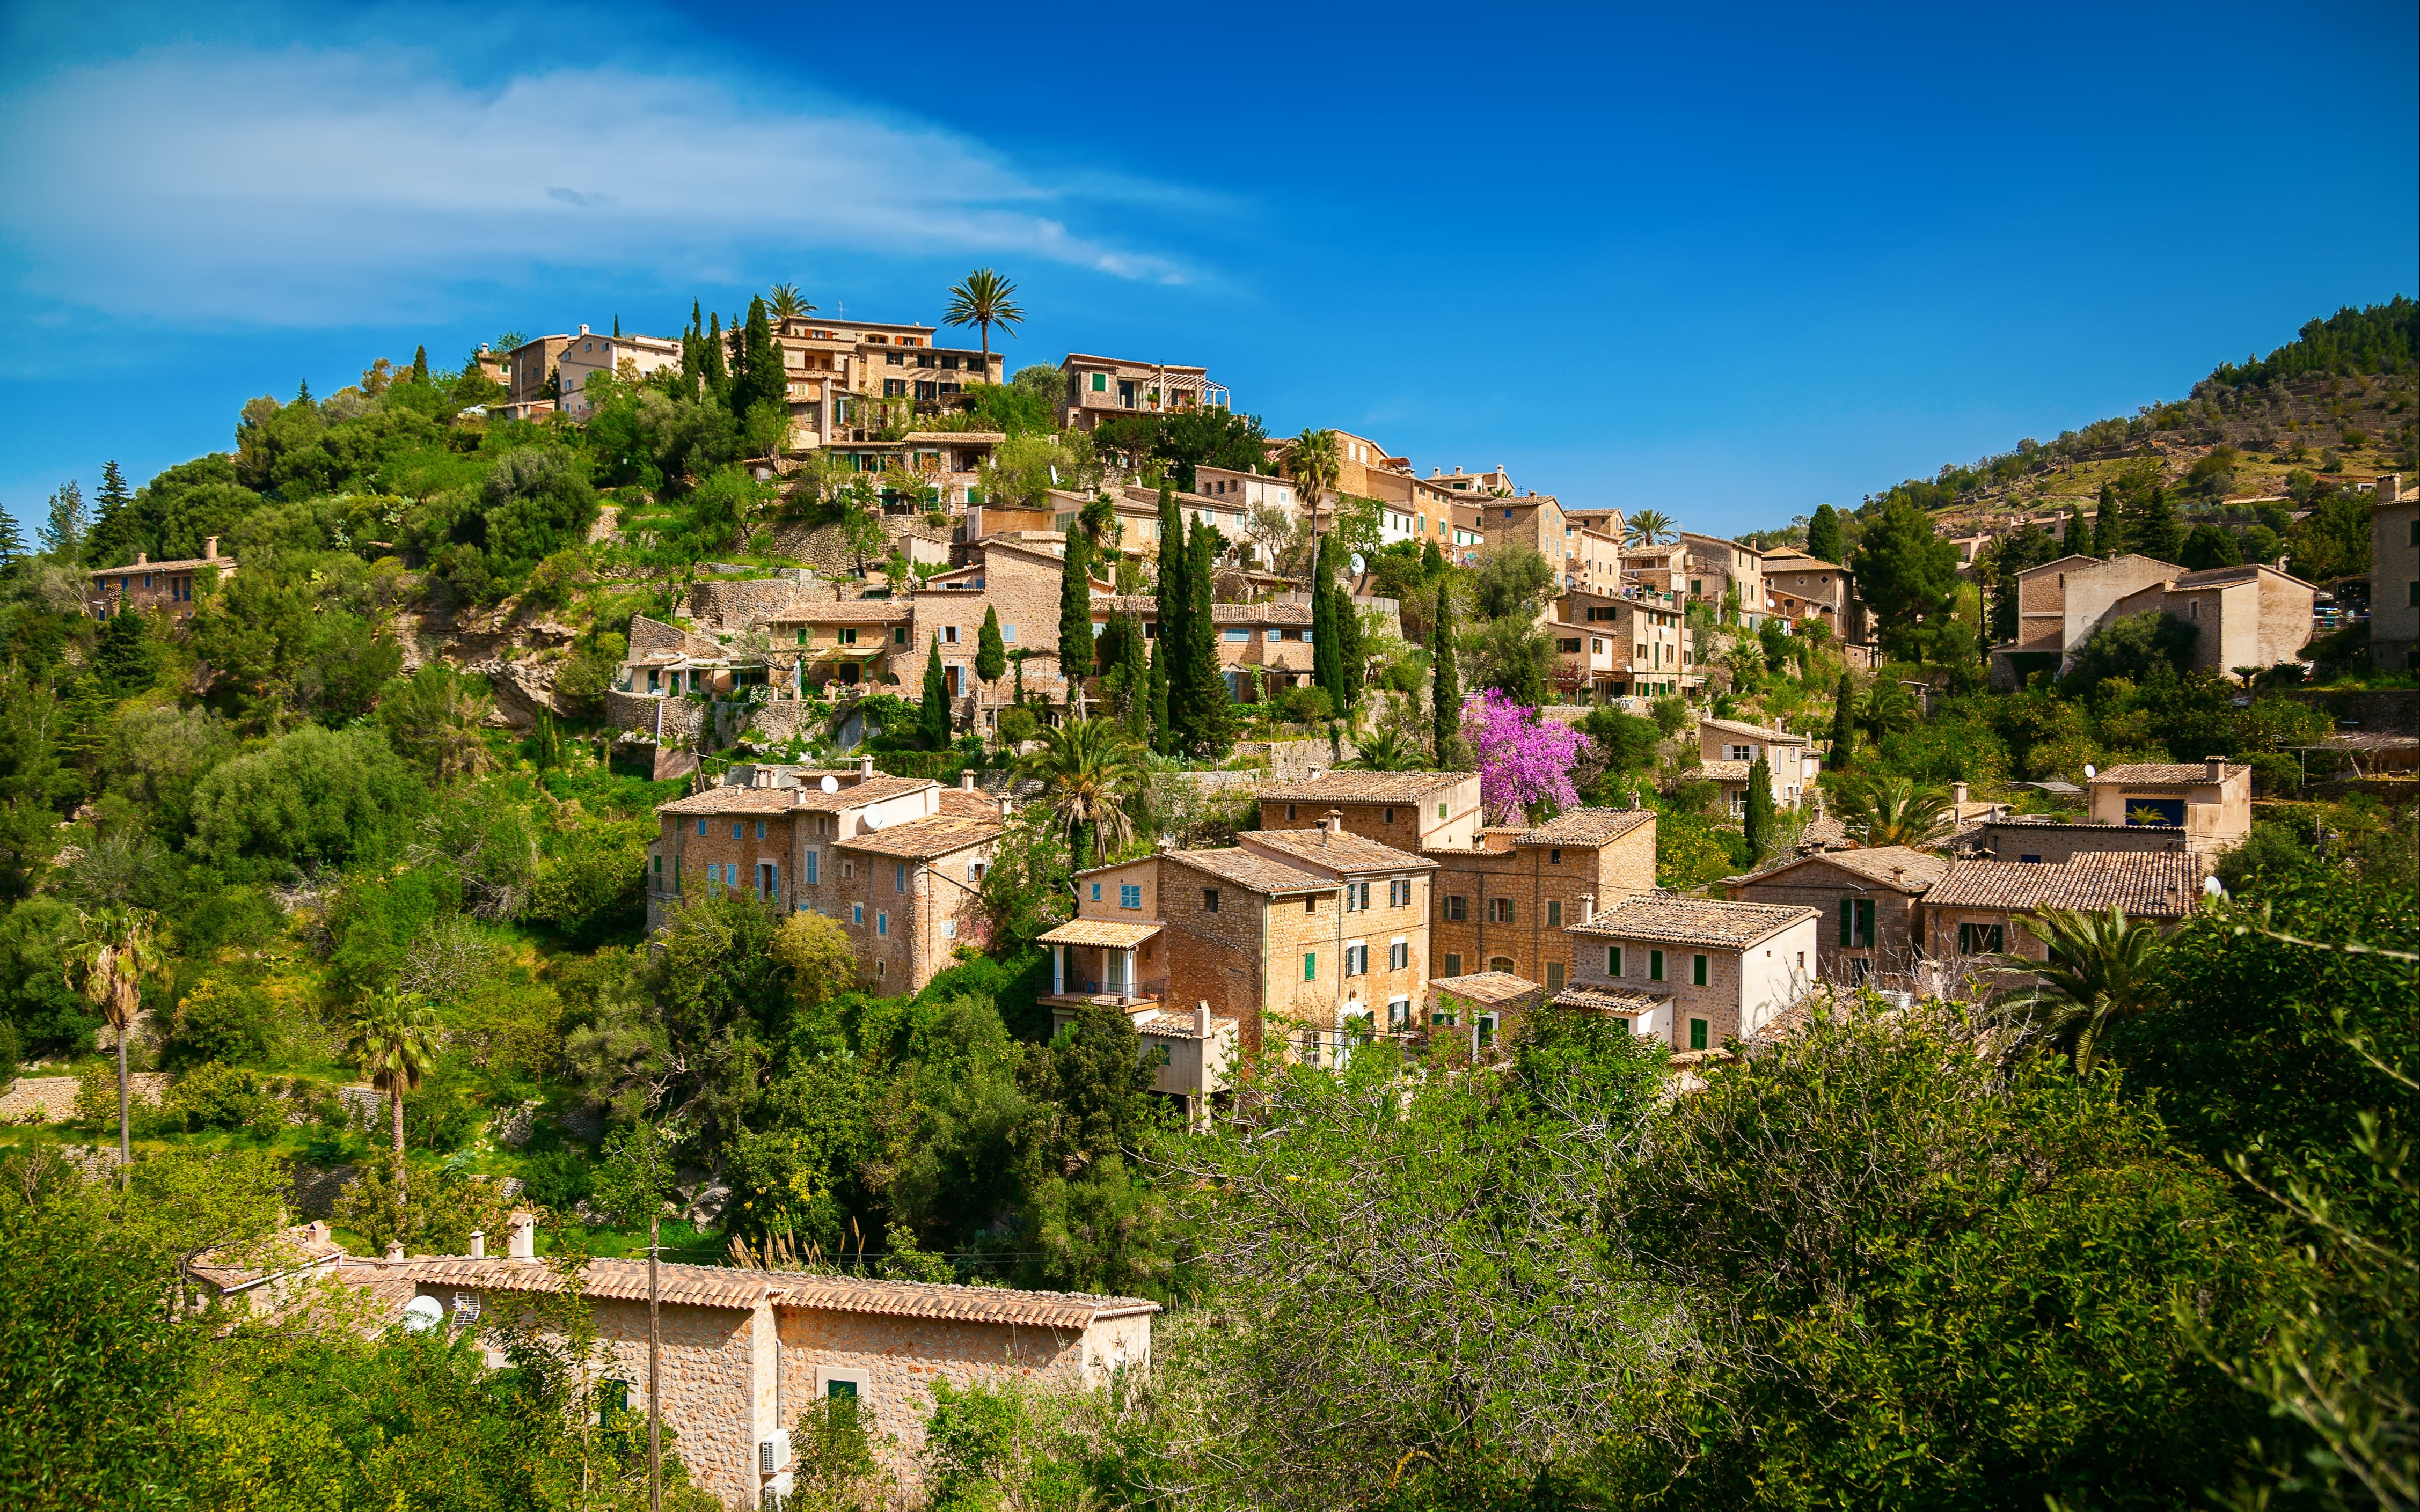 An image of the Mallorcan village of Deia